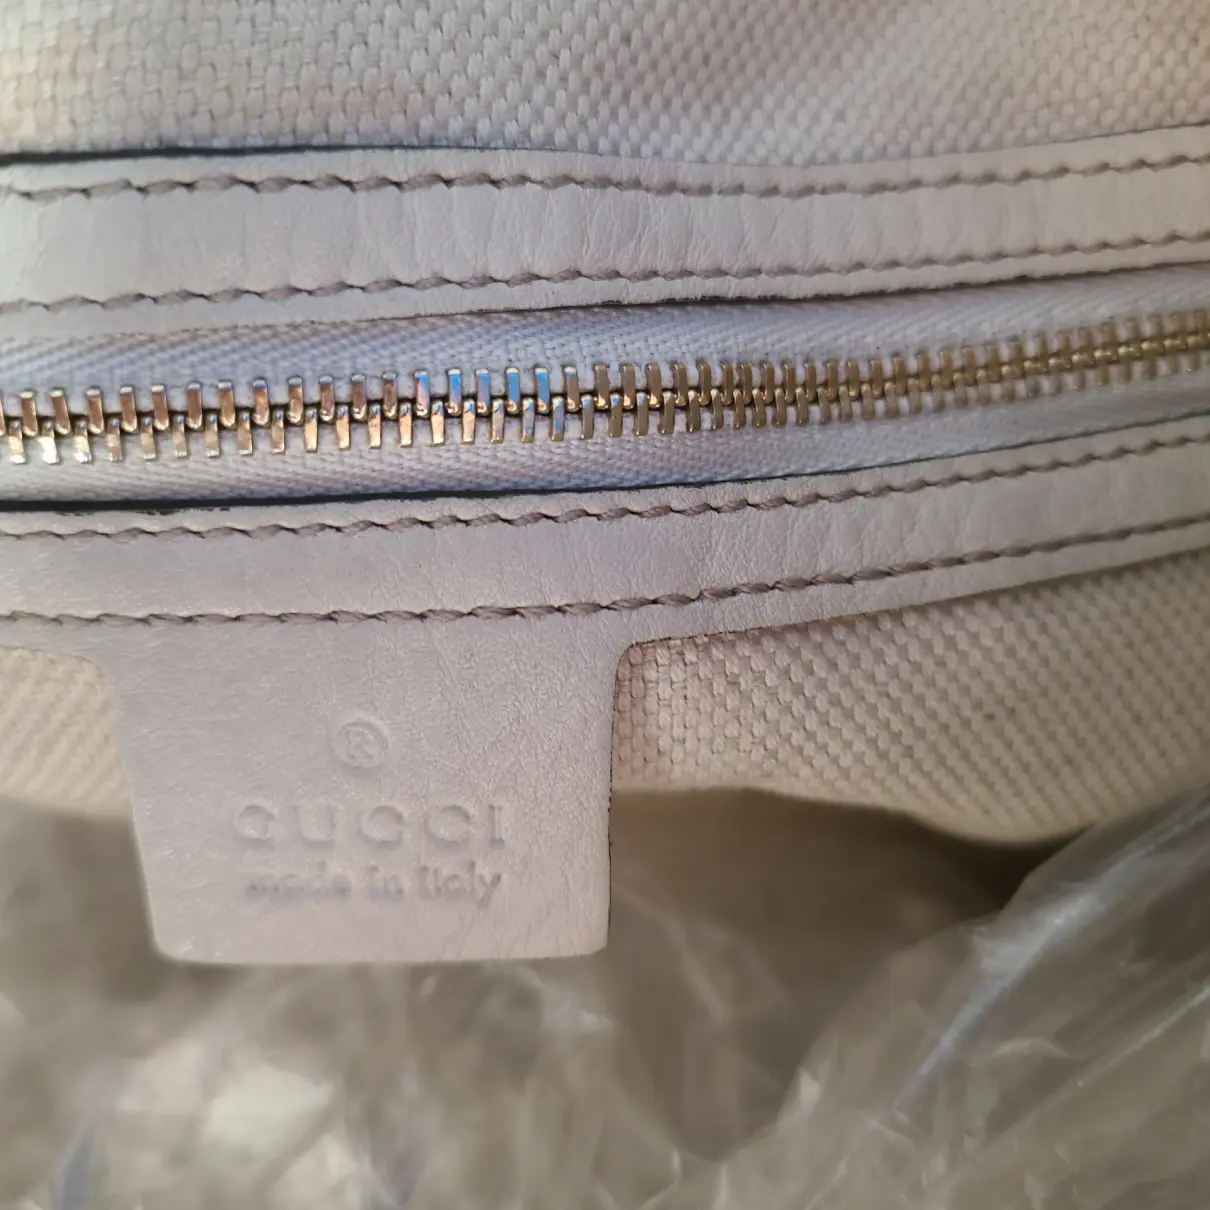 Buy Gucci Soho Top Handle leather handbag online